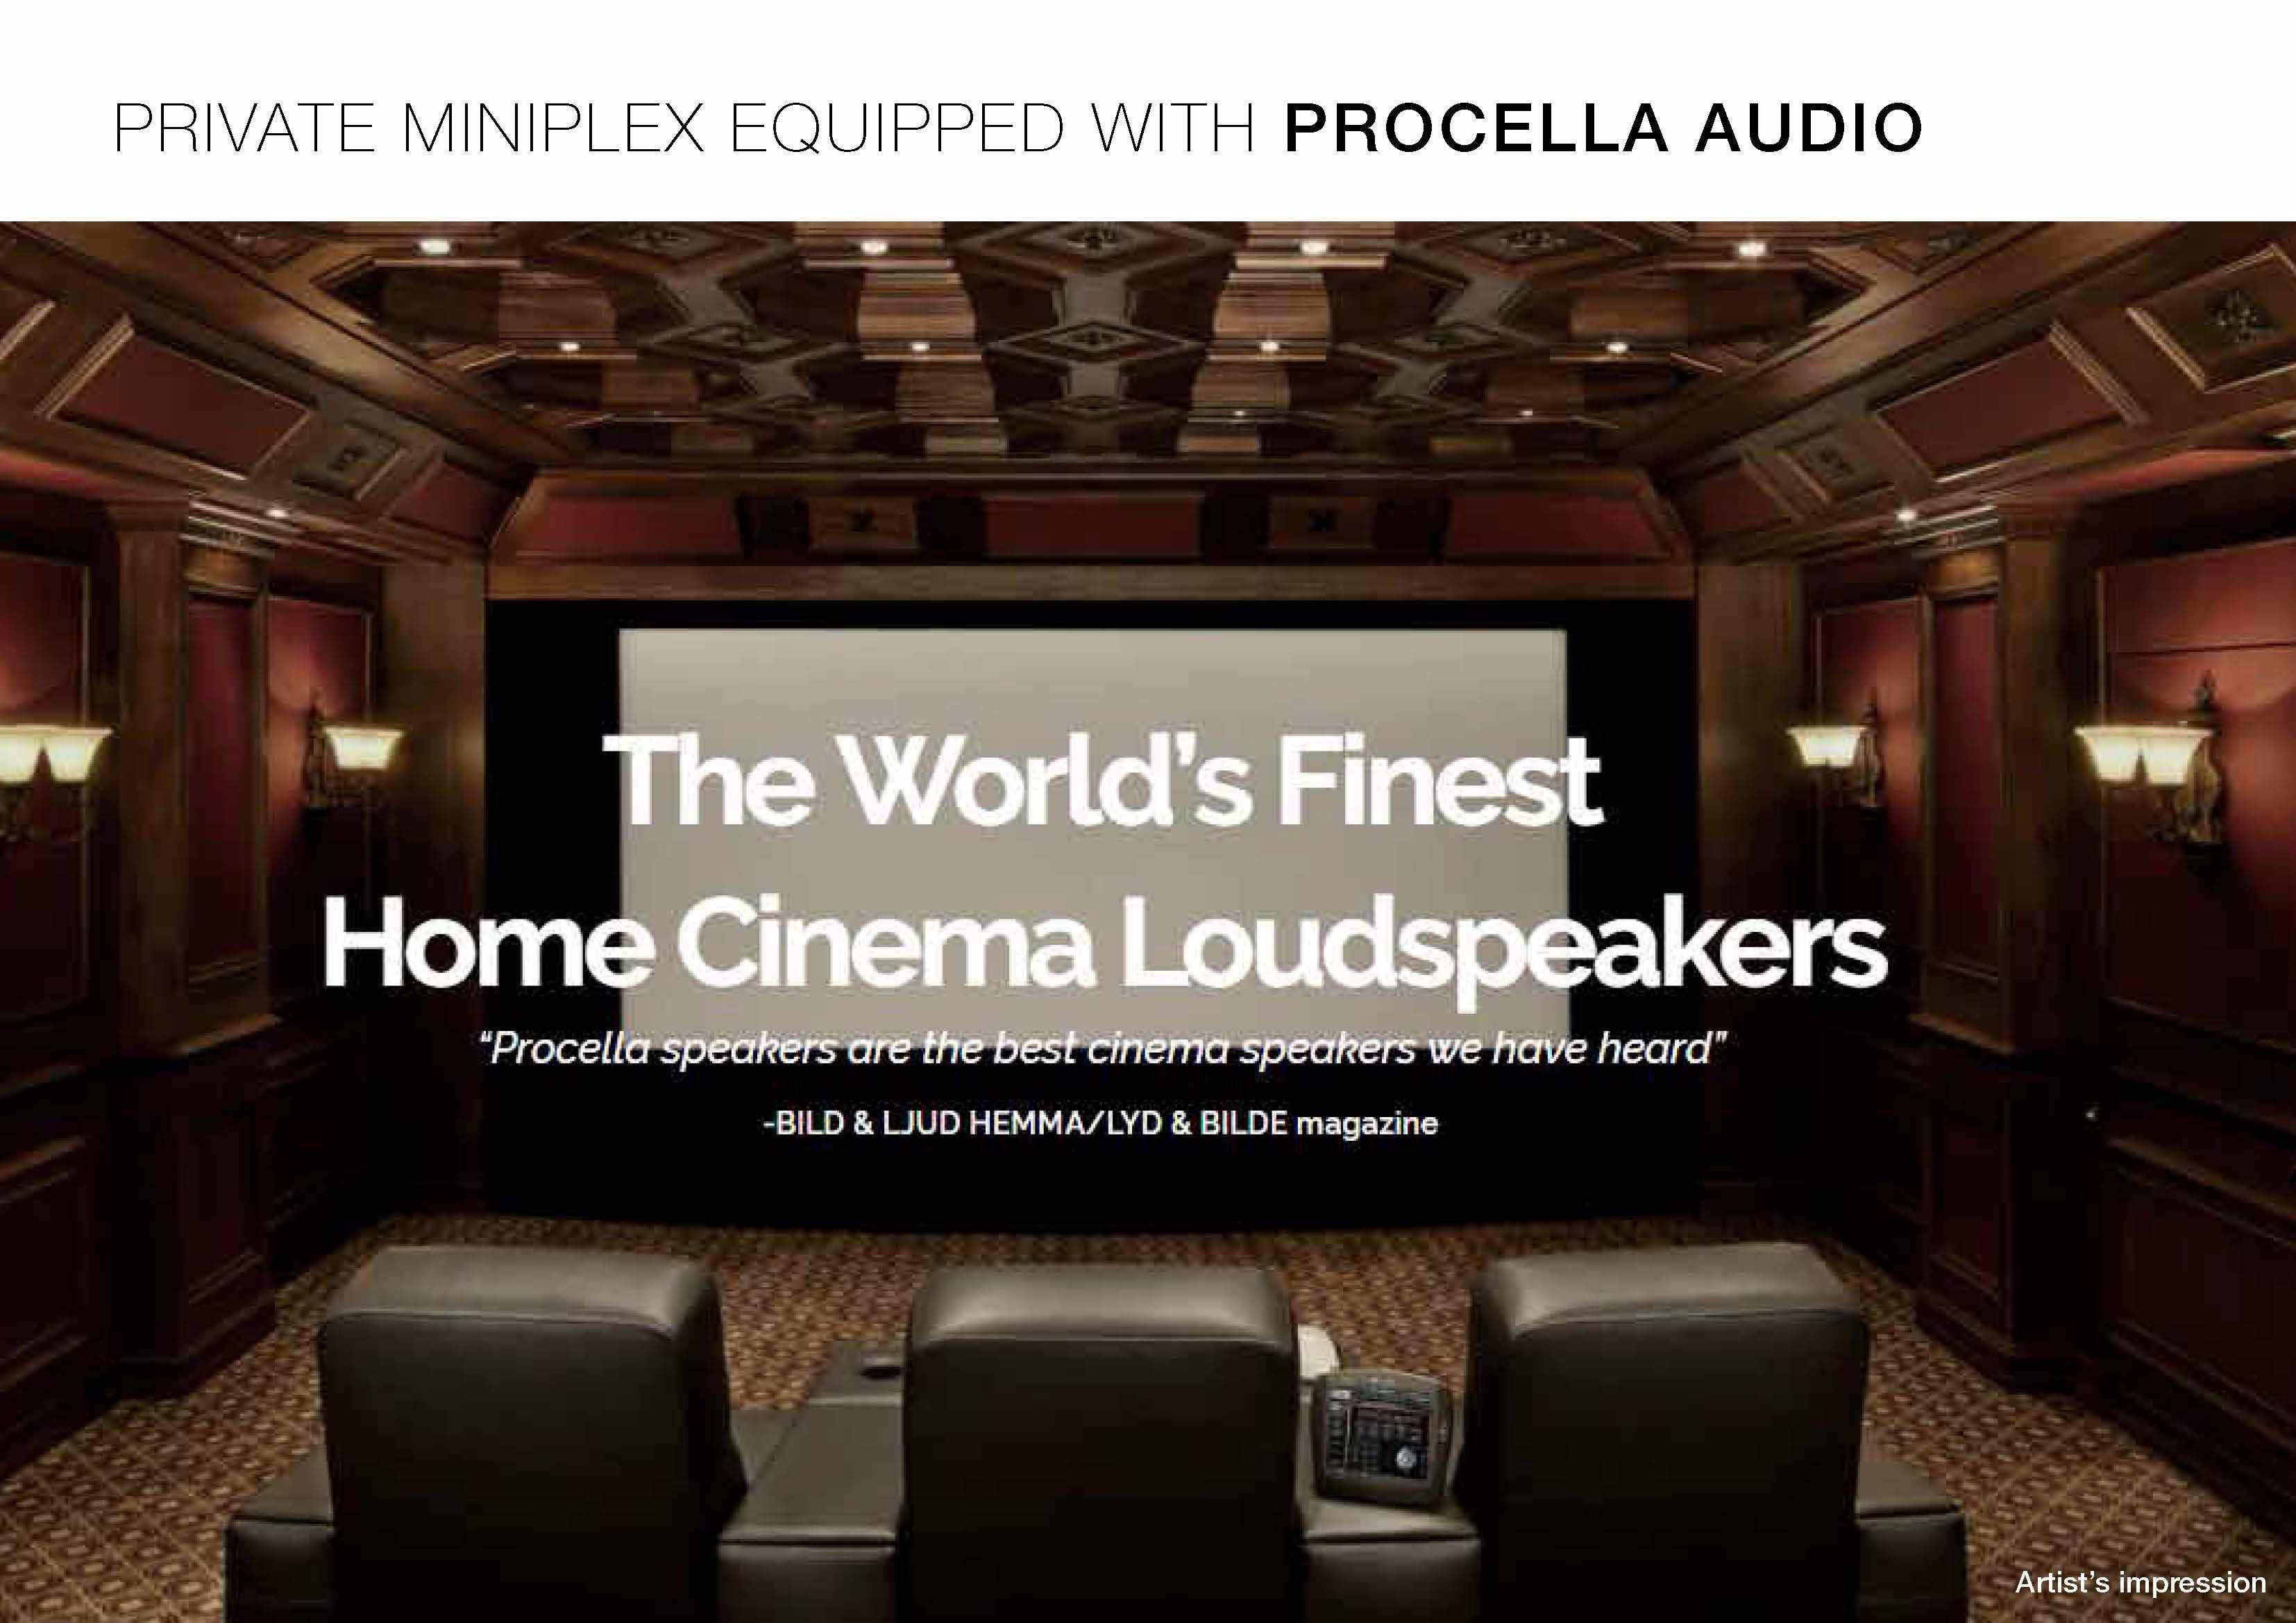 Private Miniplex equipped with Procella Audio at Godrej Summit